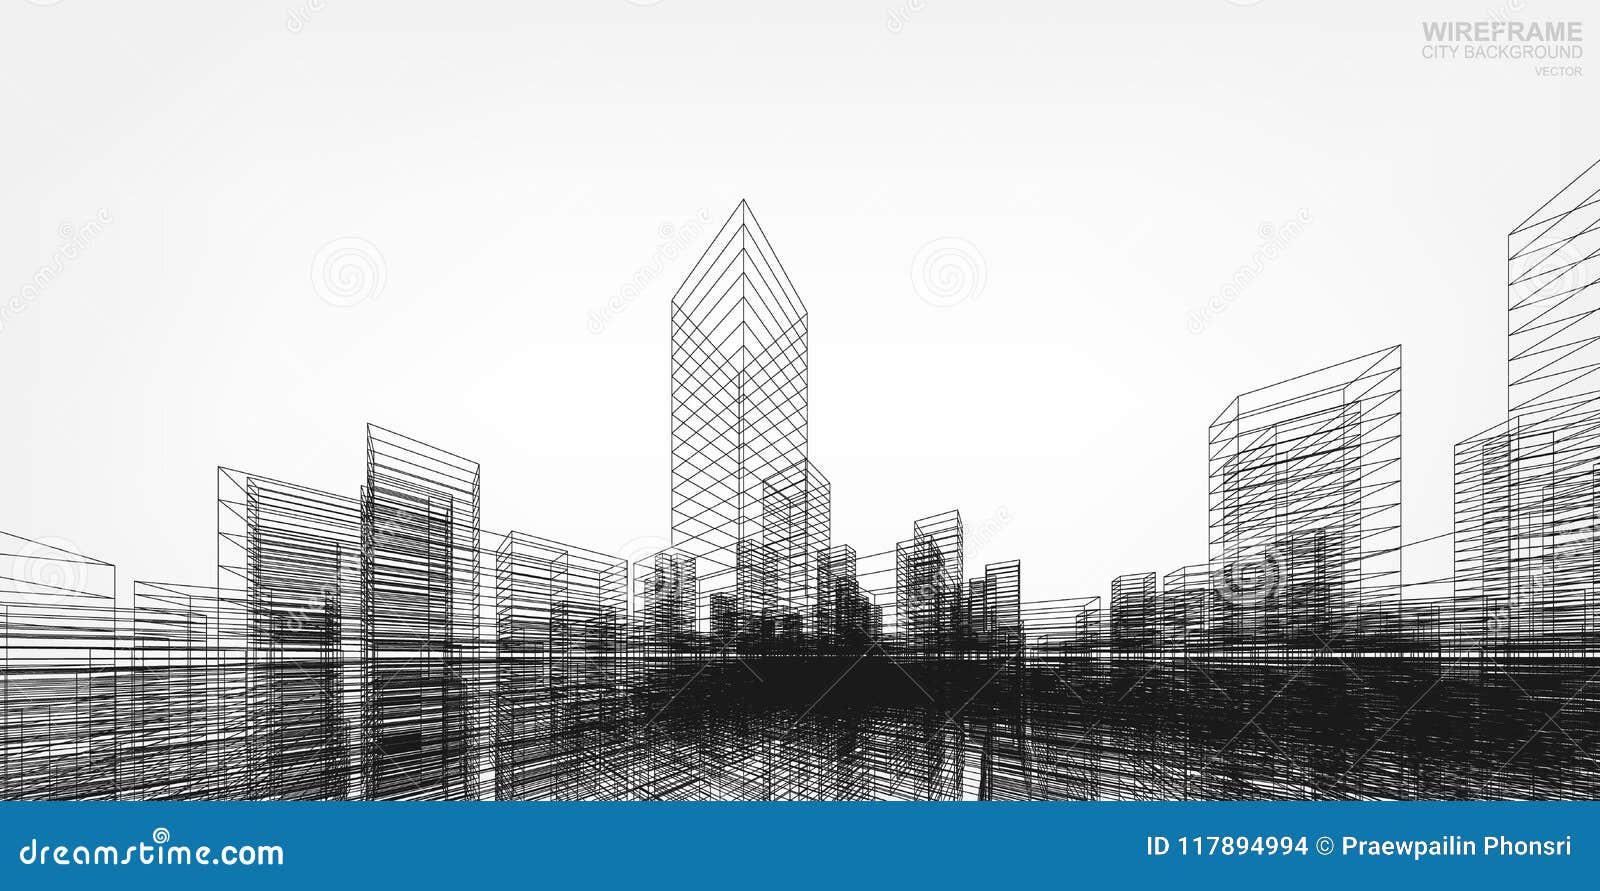 Download Perspective 3D Render Of Building Wireframe. Vector. Stock ...